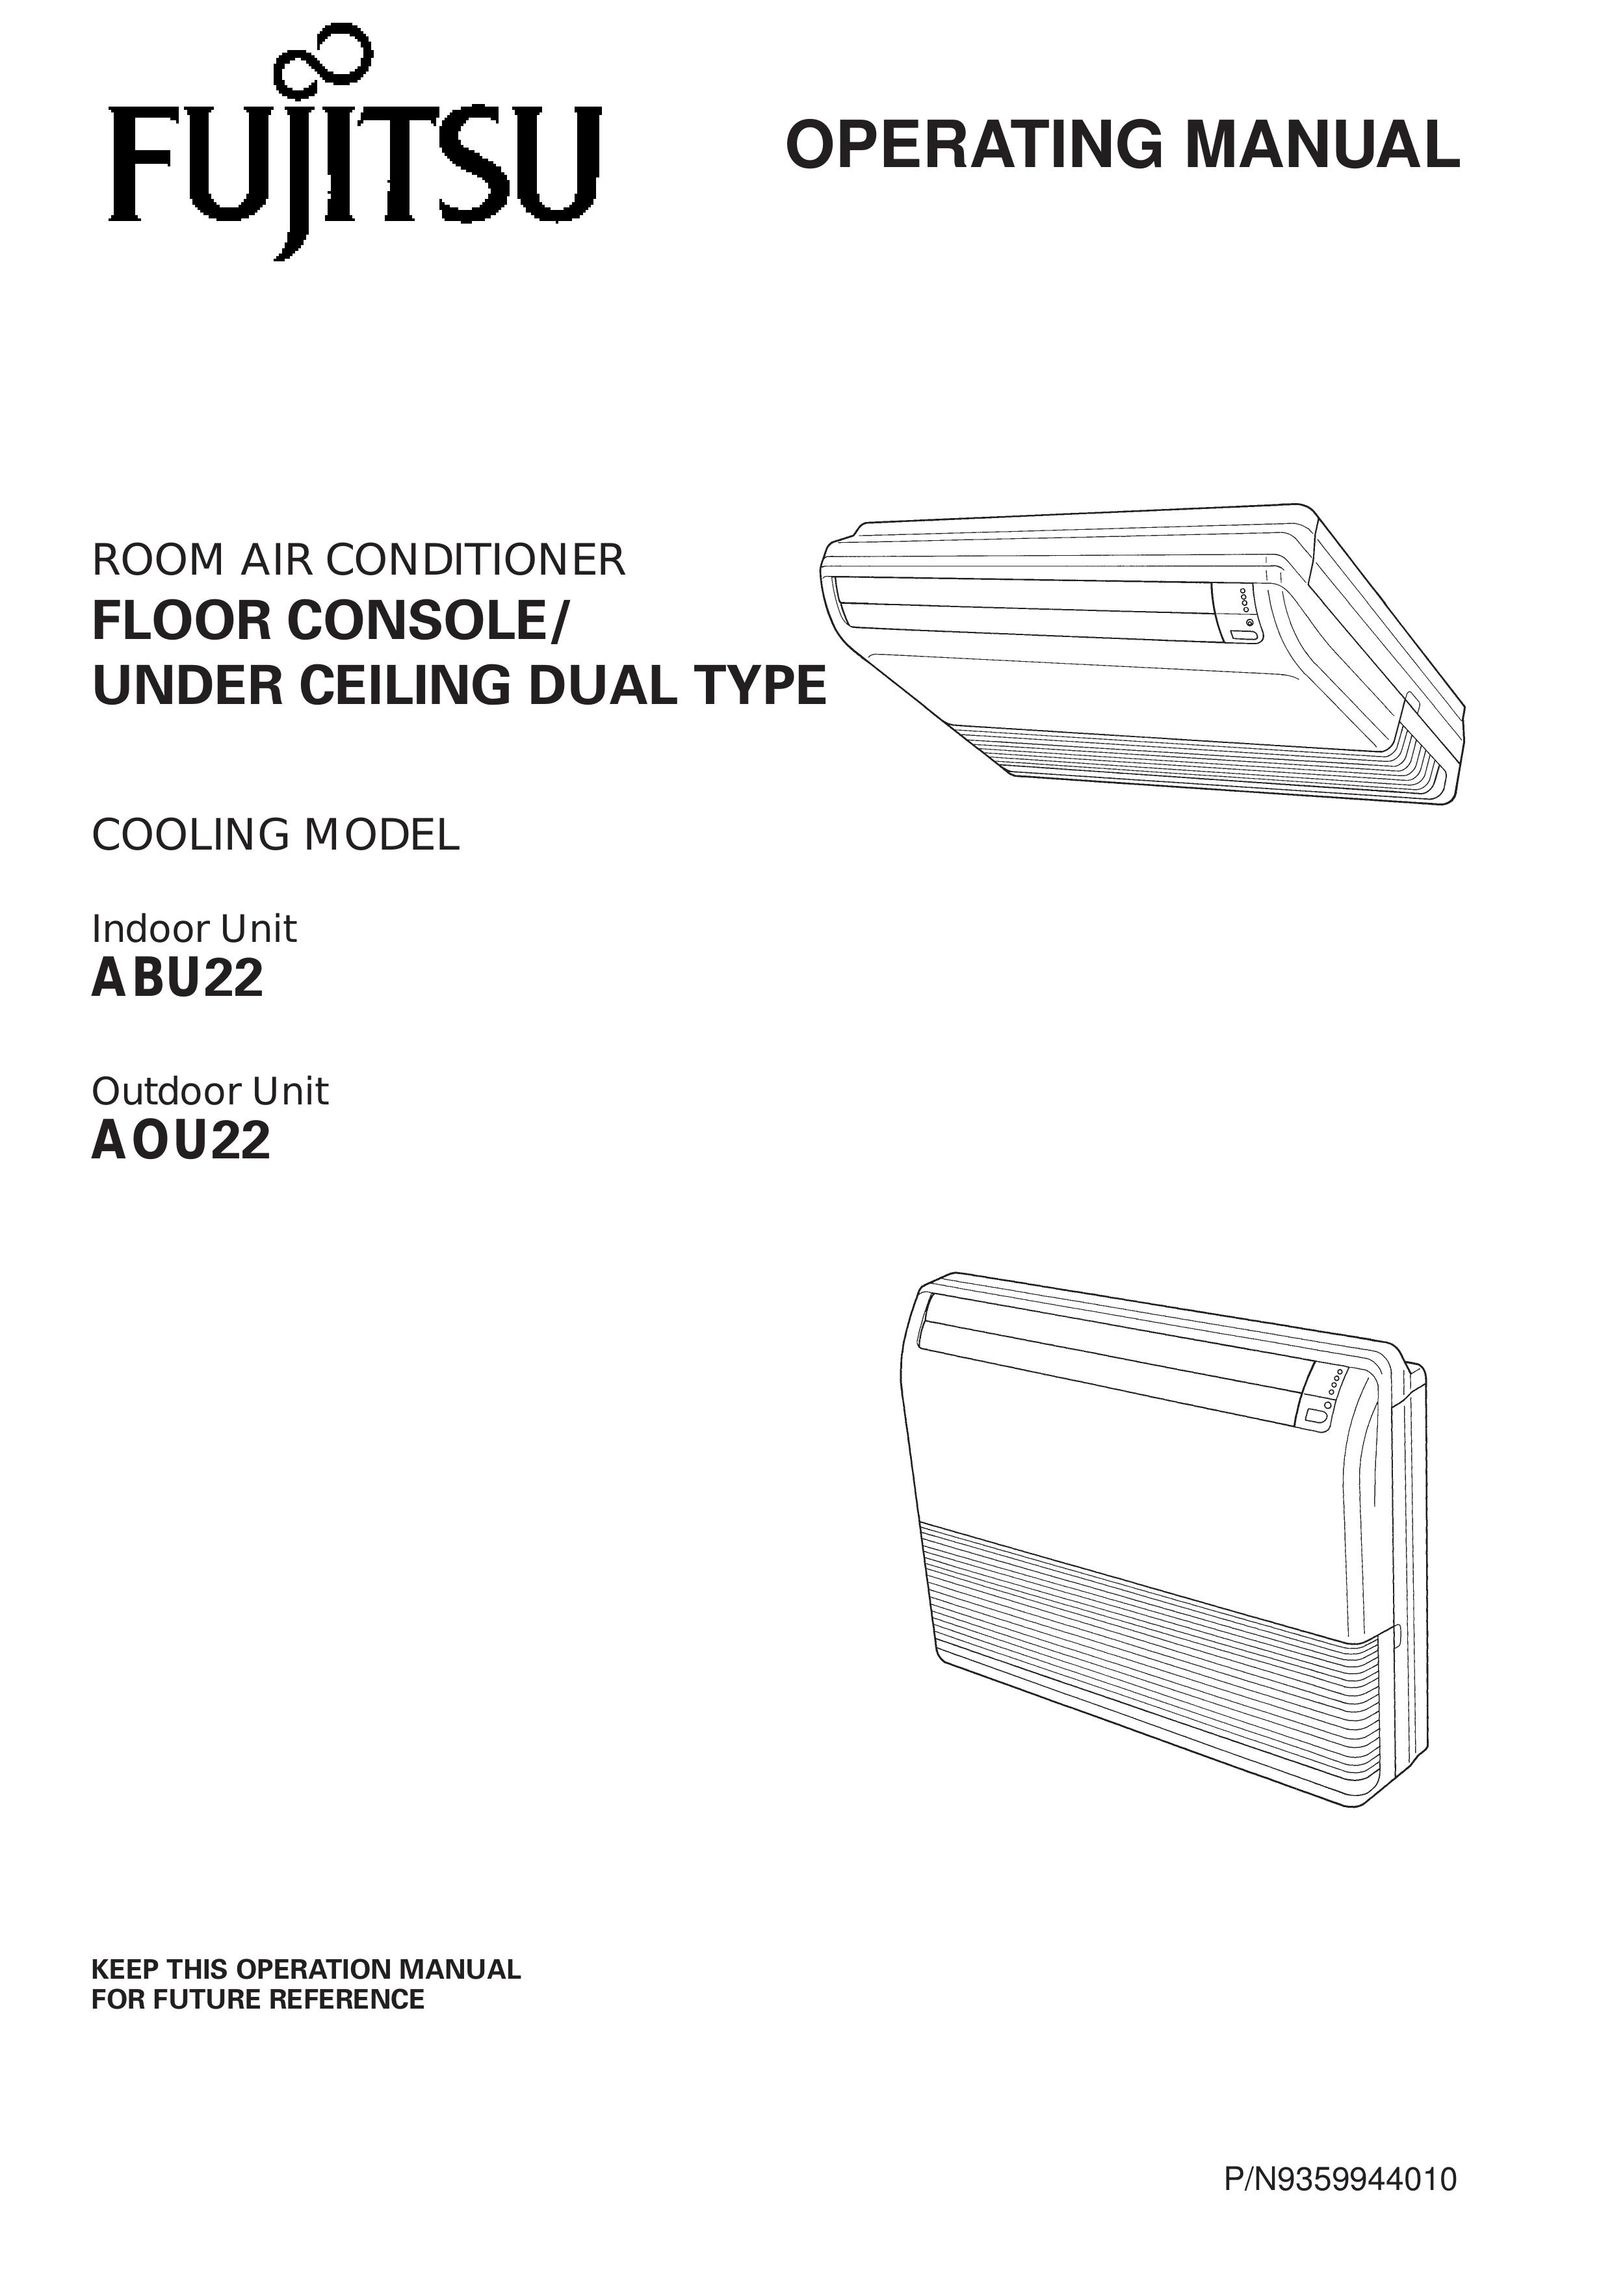 Fujitsu ABO22 Video Game Console User Manual (Page 1)